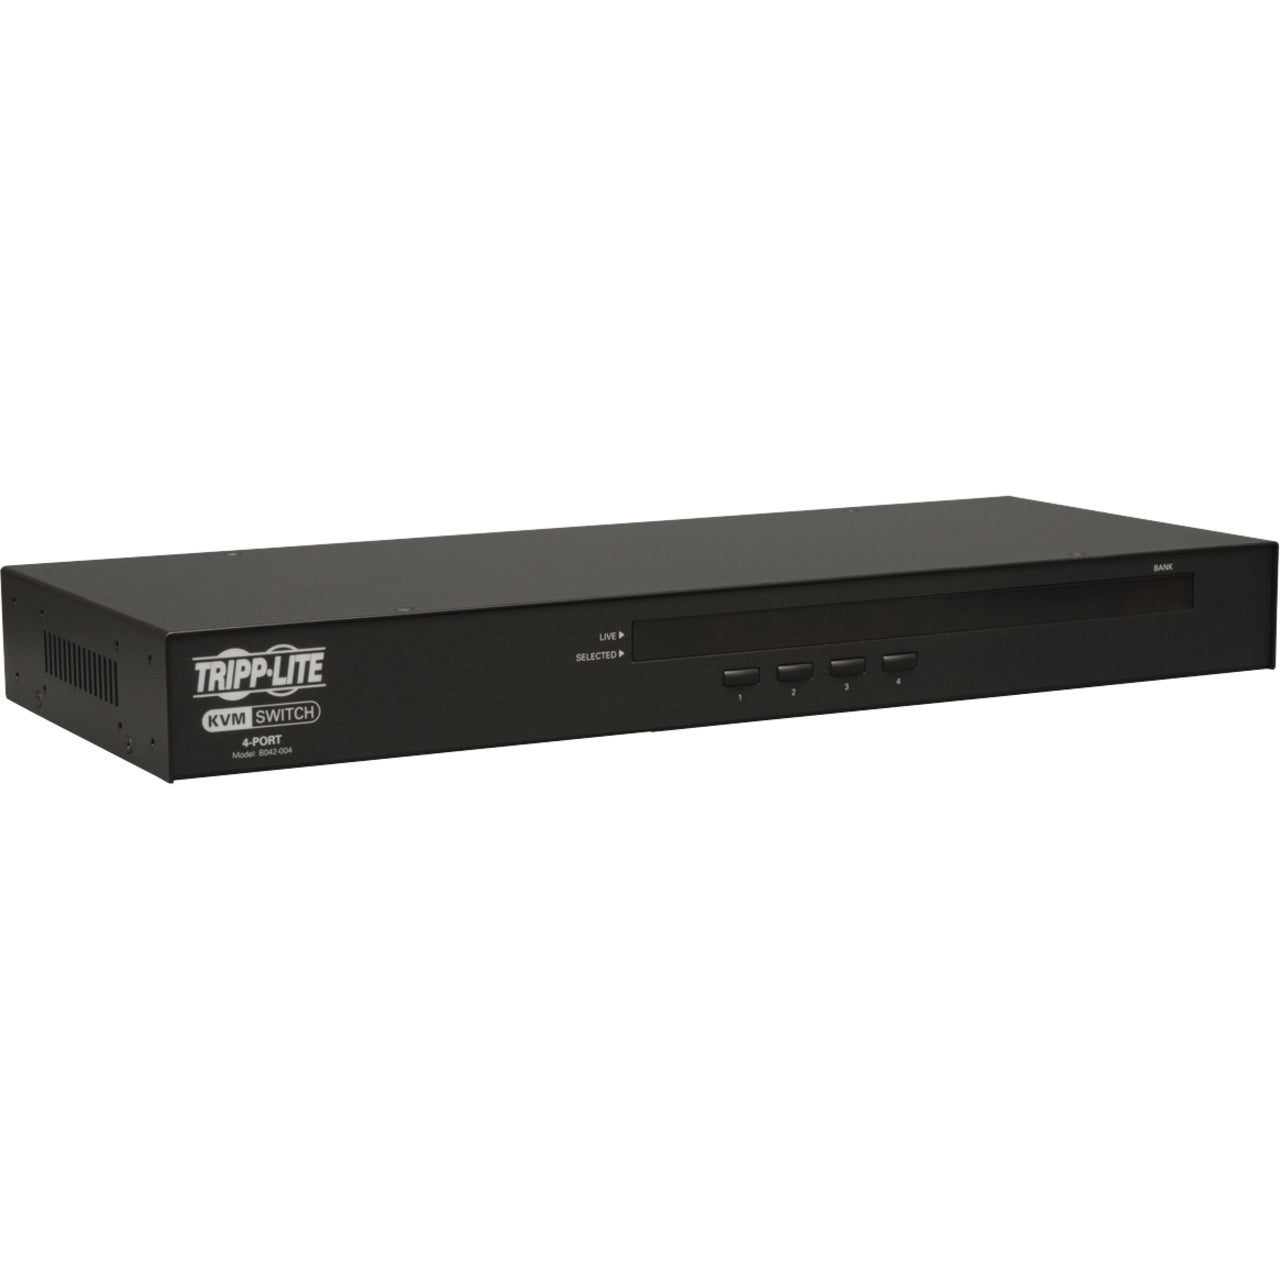 Tripp Lite B042-004 NetController KVM Switch, 4-Port Rackmount USB/PS2, QXGA, 2048 x 1536 Resolution